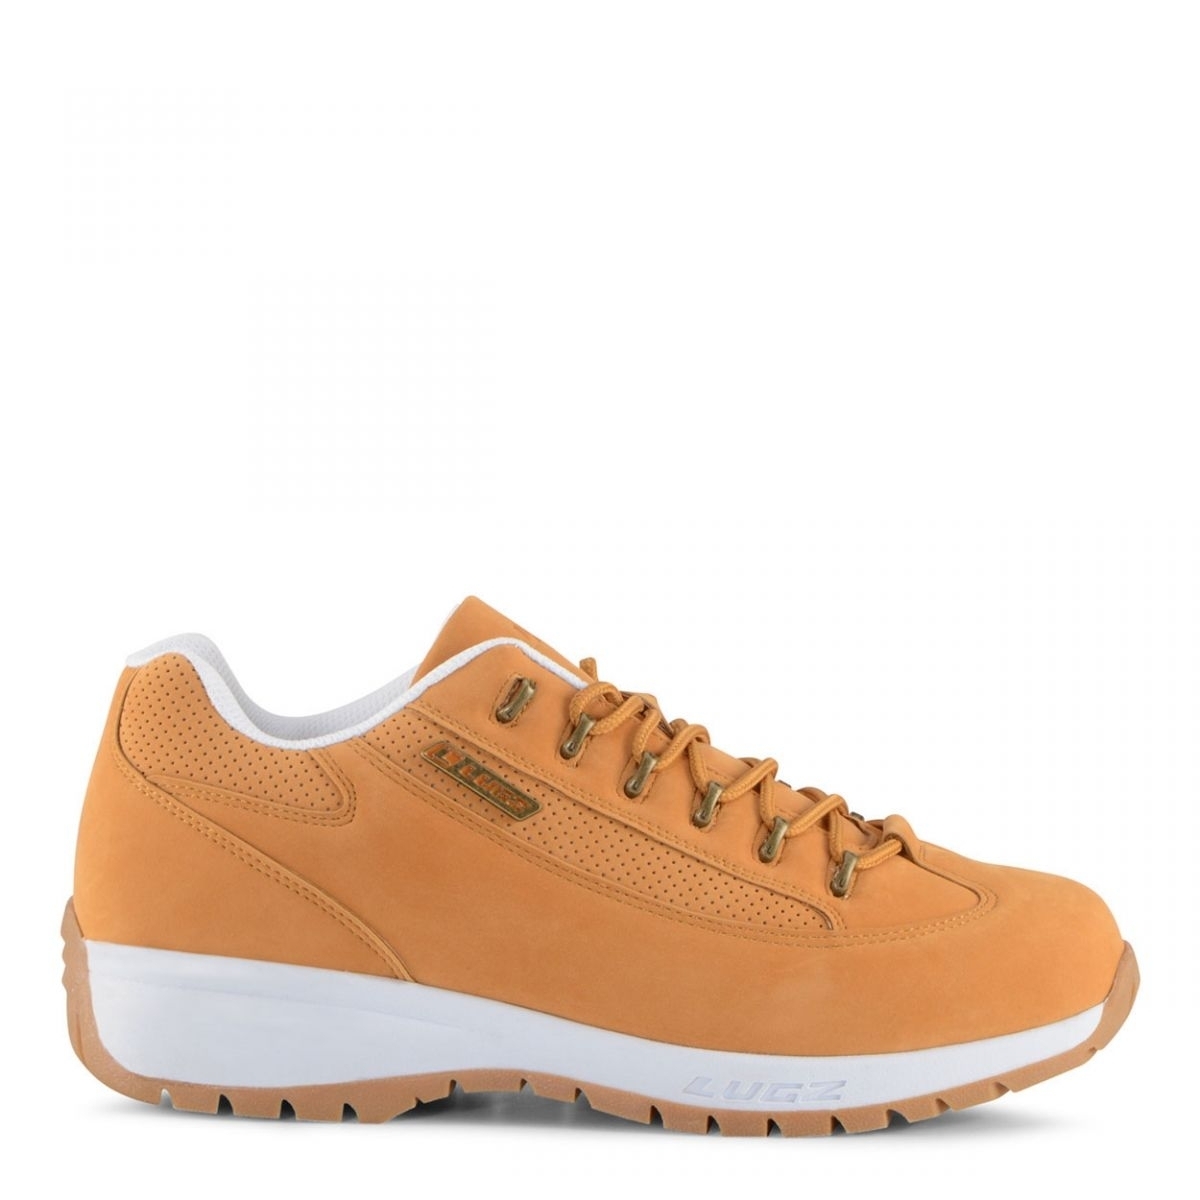 Lugz Men's Express Sneakers Golden Wheat/White - MEXPRSPK-714 Golden Wheat/White/Gum - Golden Wheat/White/Gum, 10